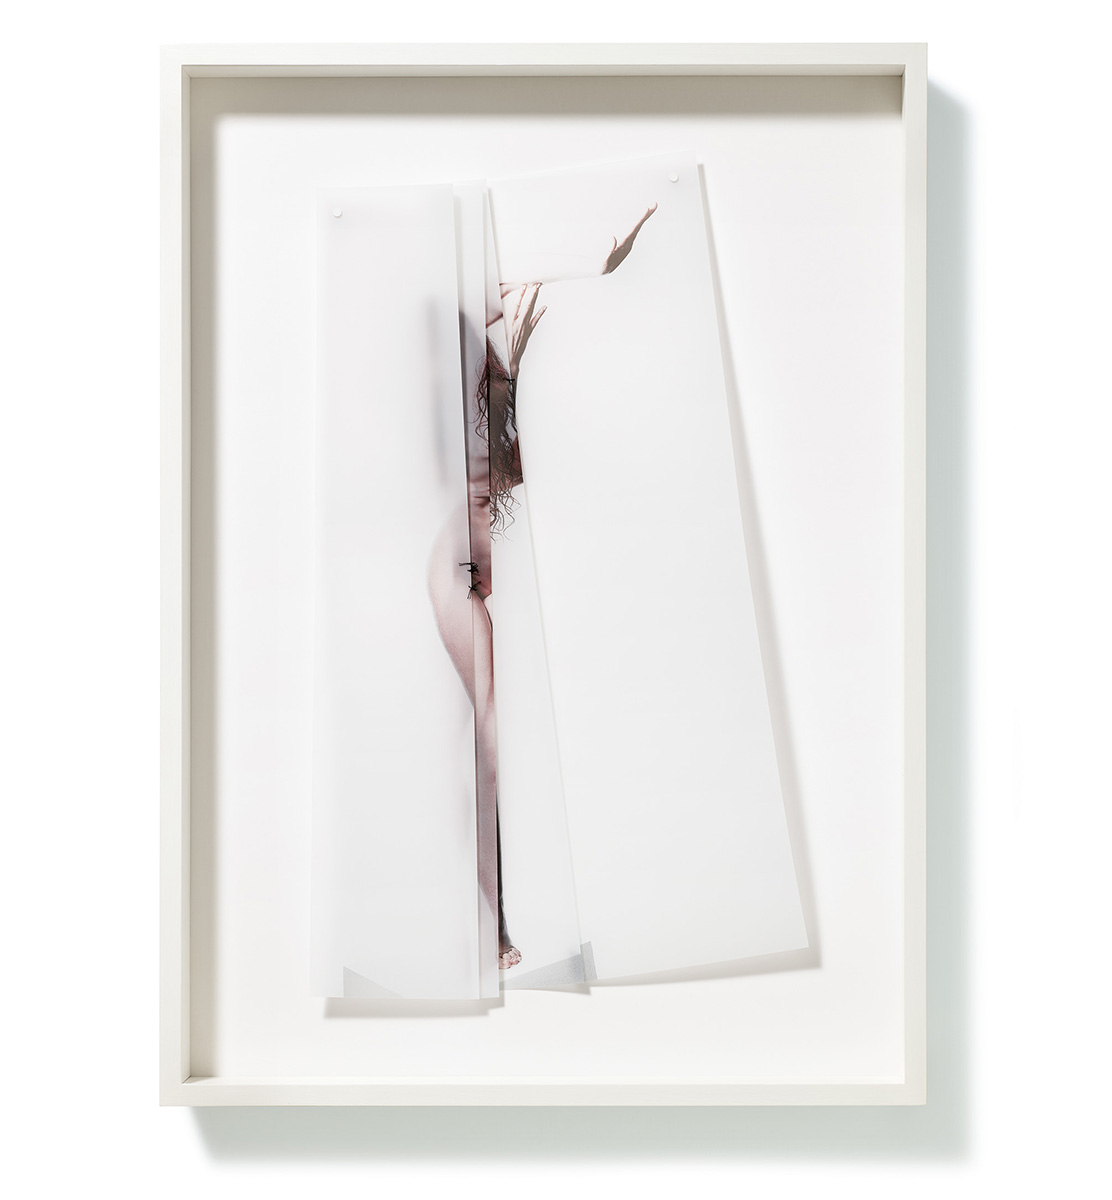 Zur Figur 12, 202070 x 50 x 7,5 cmPhotography, pigment print on transparent paper, sewed; framed